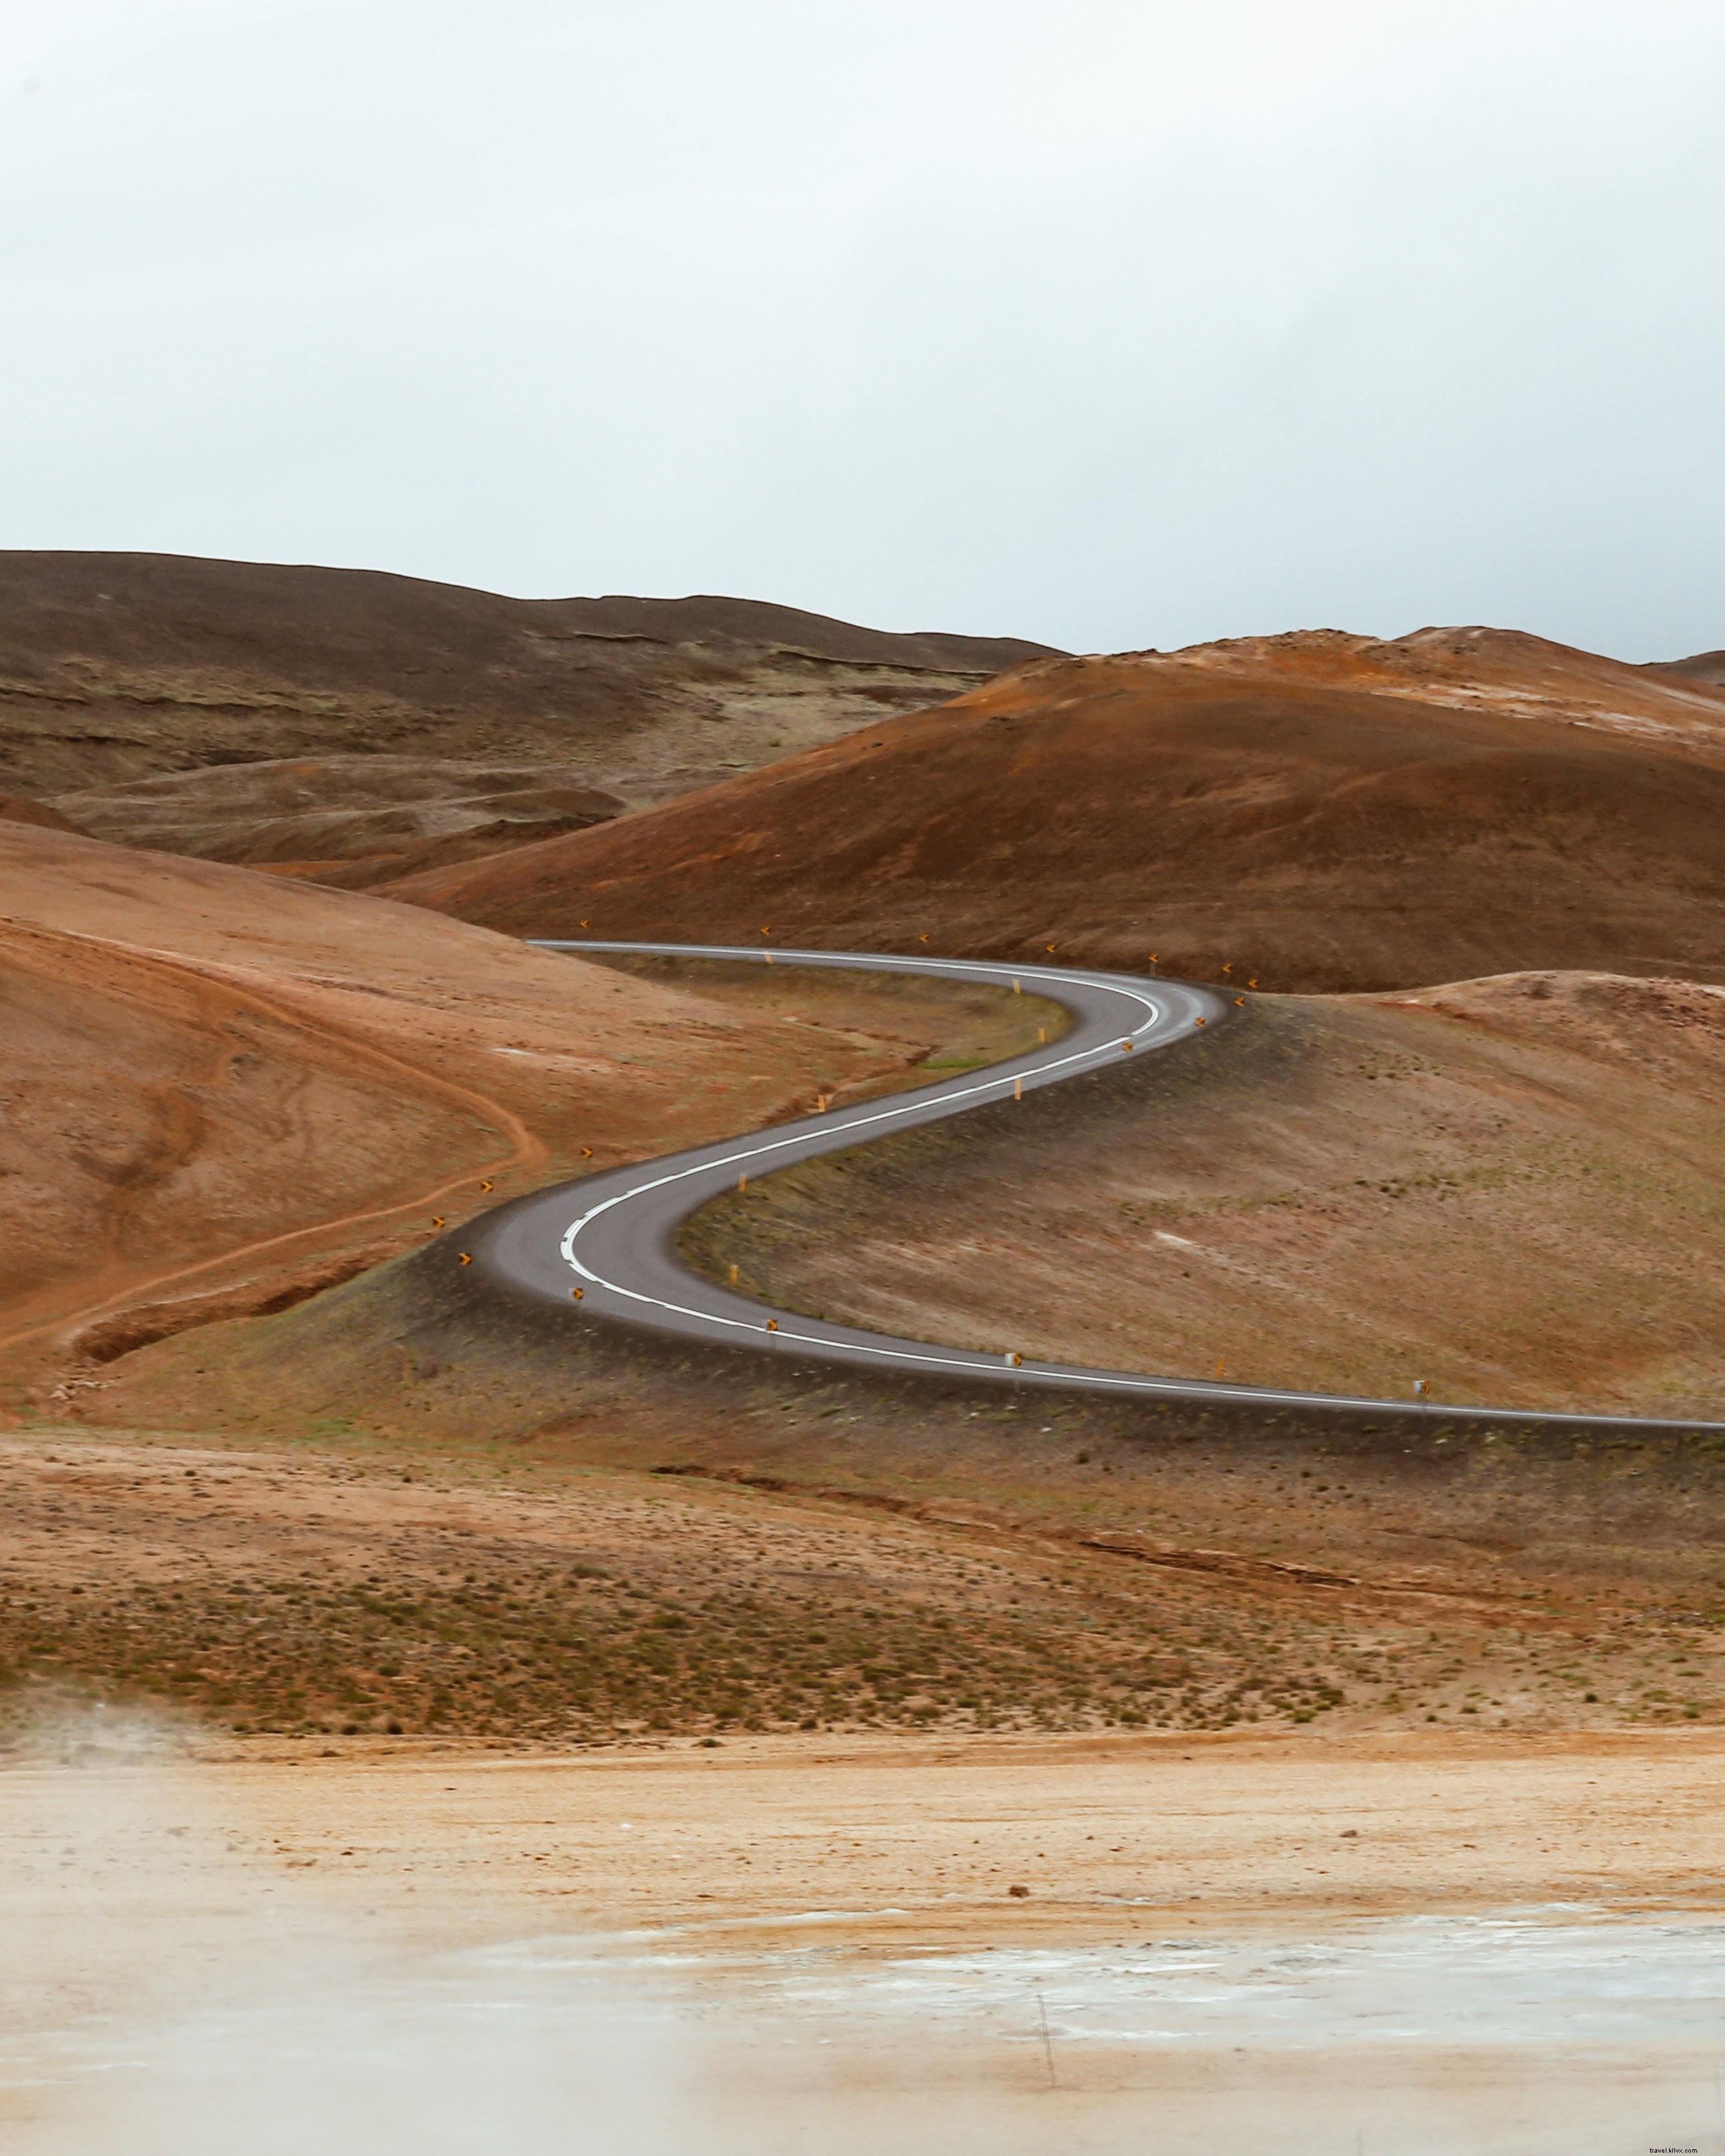 Foto de estrada sinuosa no deserto de areia